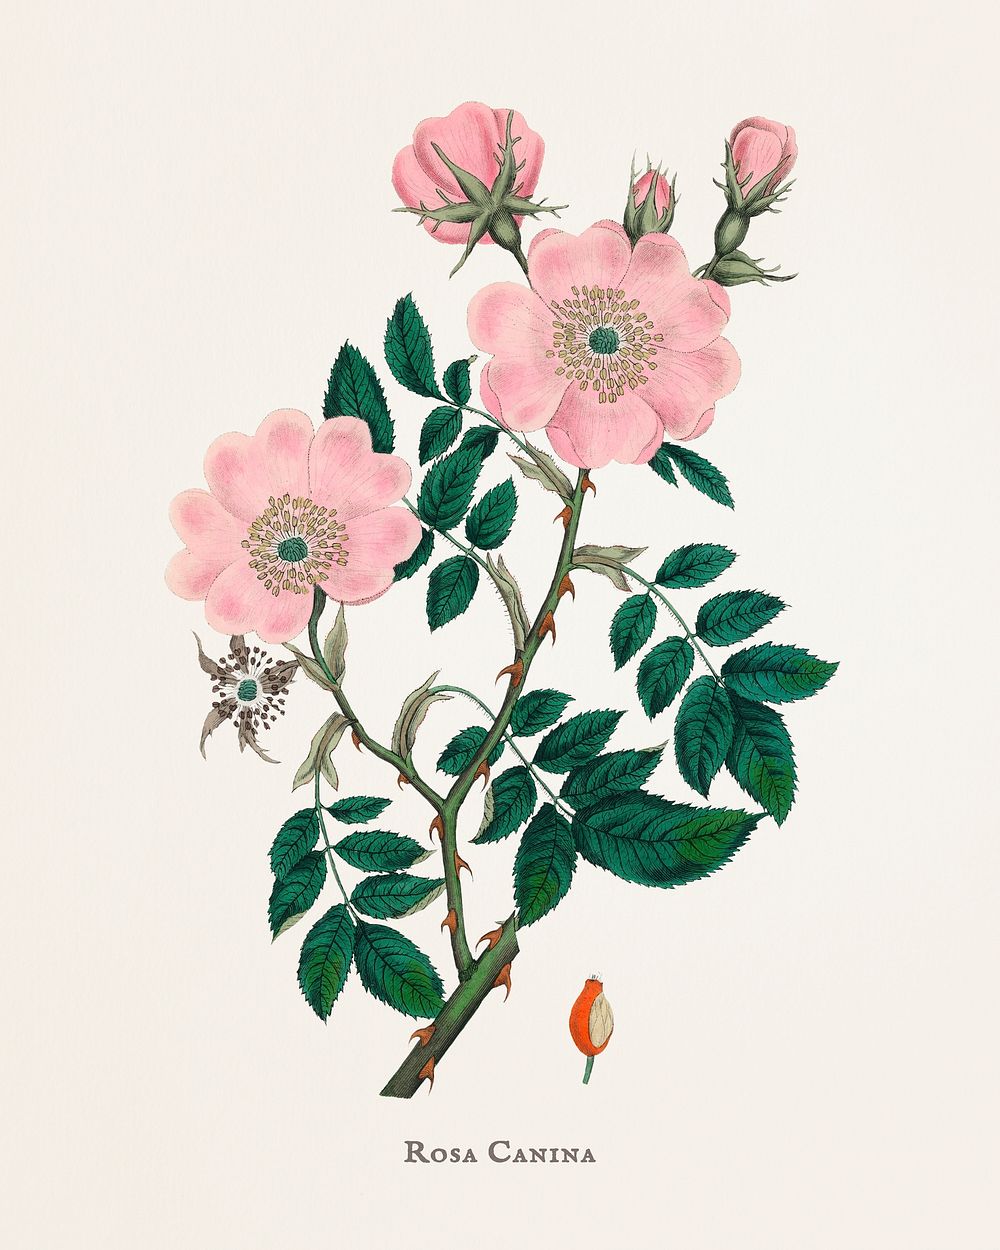 Dog rose (Rosa caninal) illustration from Medical Botany (1836) by John Stephenson and James Morss Churchill.